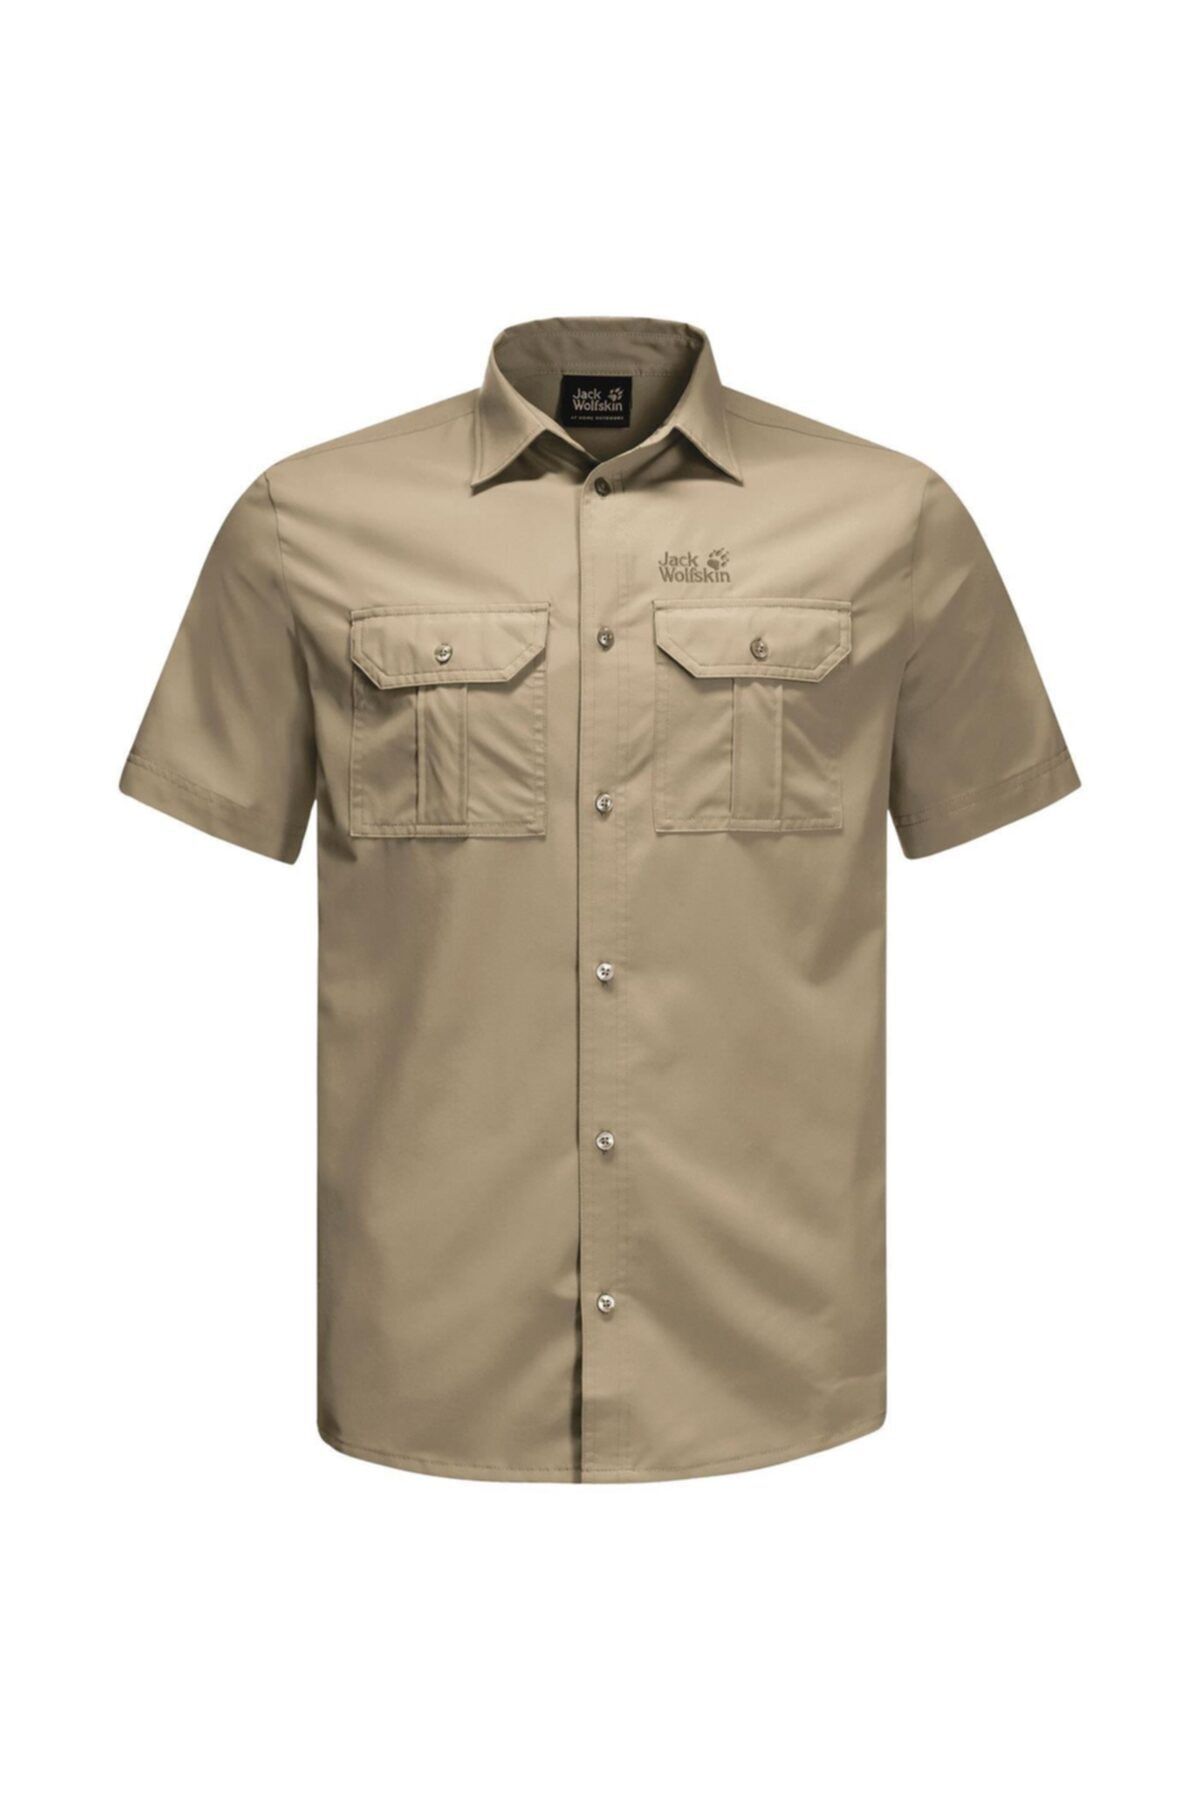 Jack Wolfskin Kwando River Shirt Erkek Gömlek - 1403181-5605